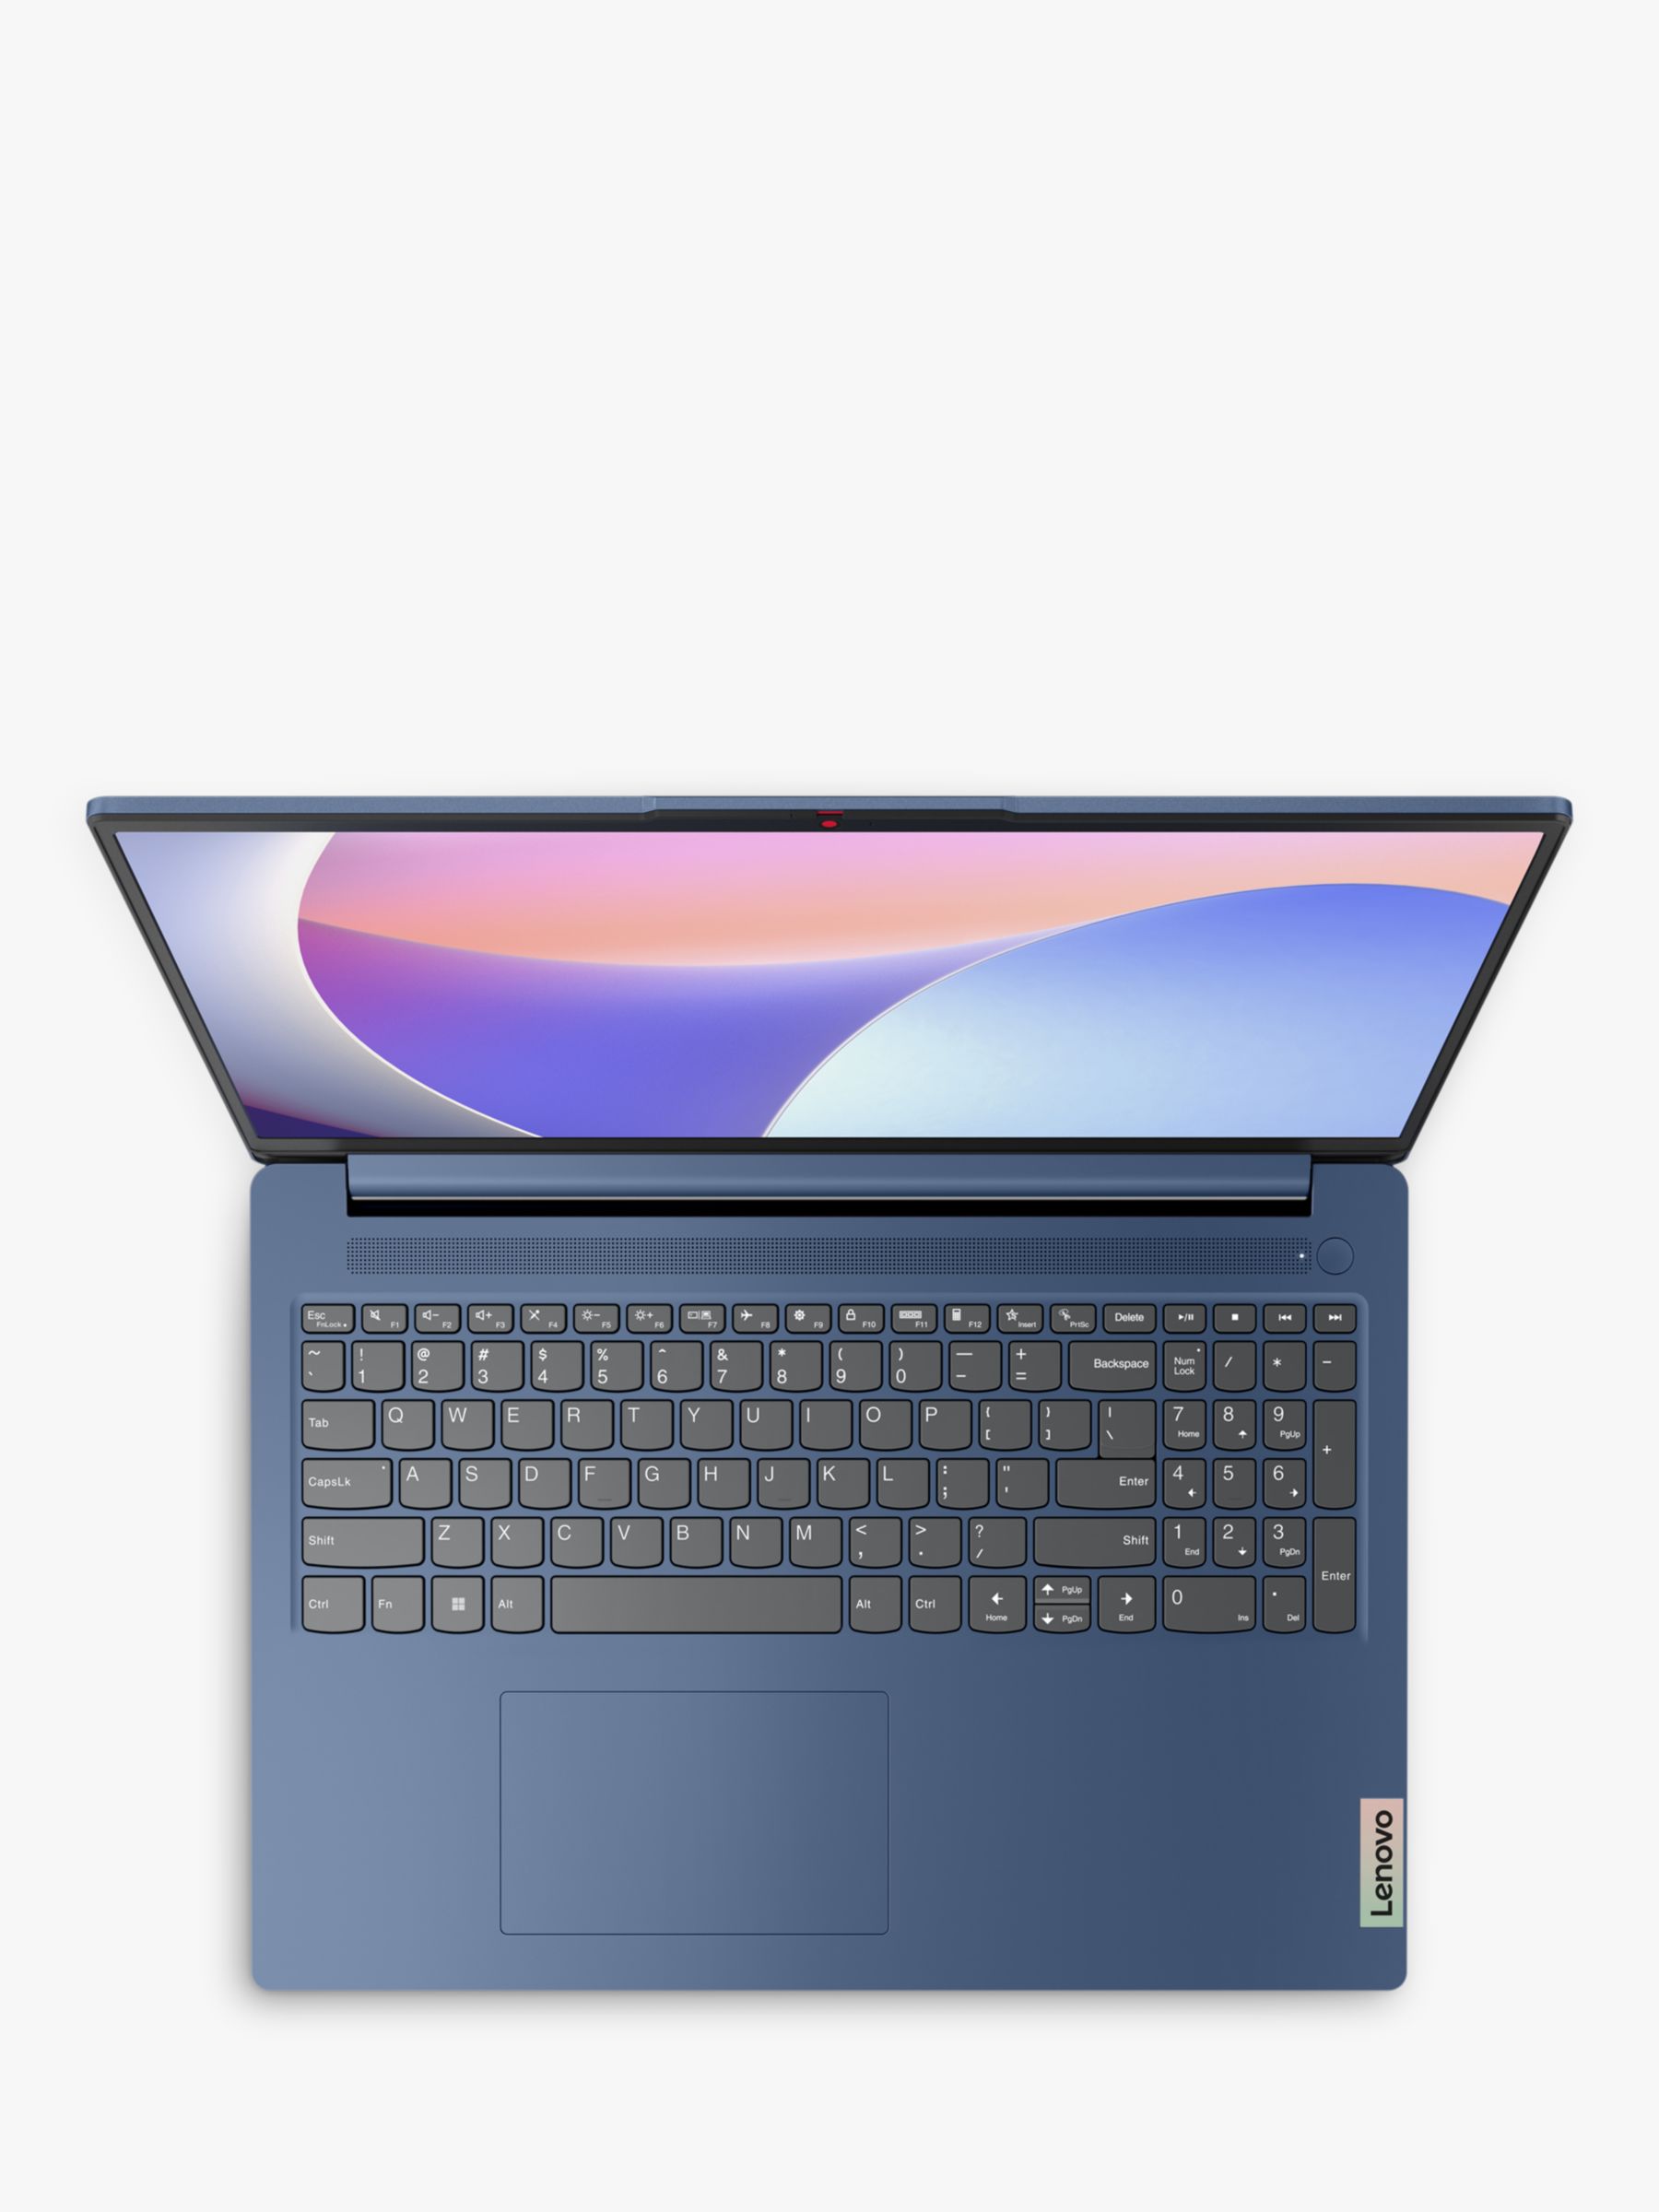 Lenovo IdeaPad Slim 3i Laptop, Intel U Series Processor, 4GB RAM 